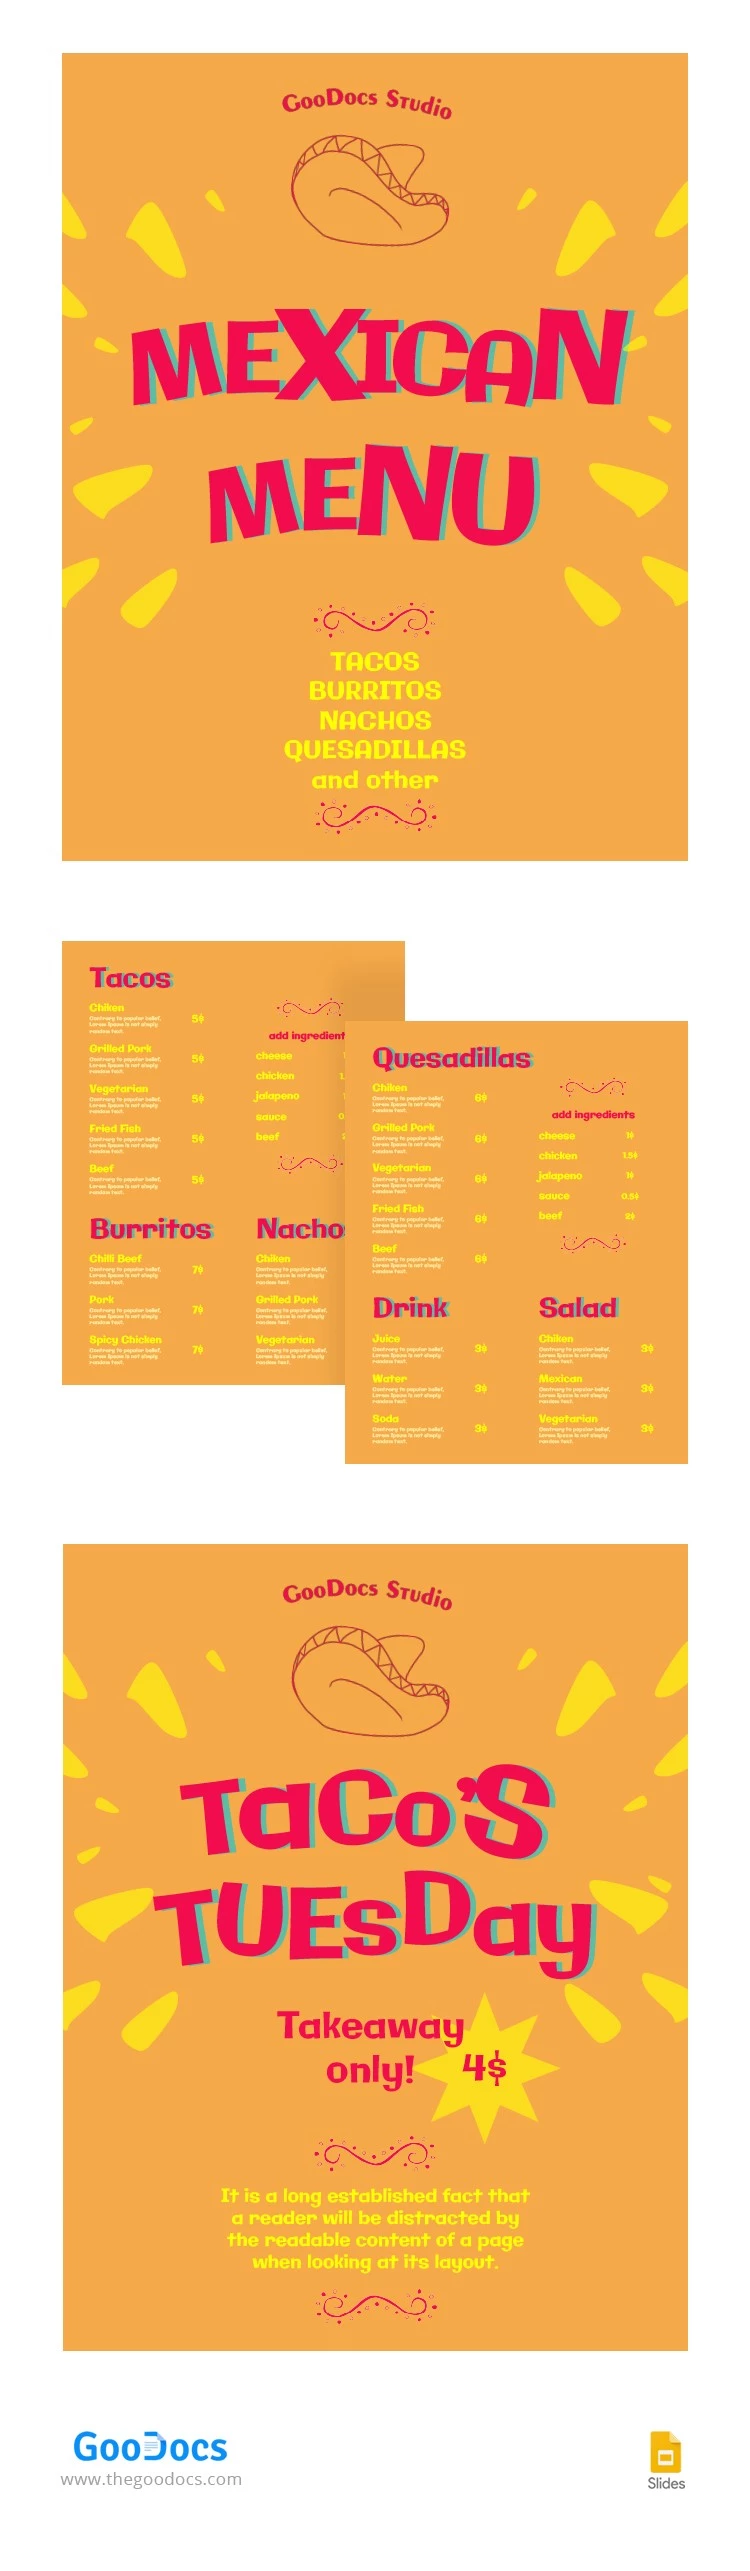 Menú del restaurante mexicano Orange. - free Google Docs Template - 10064711